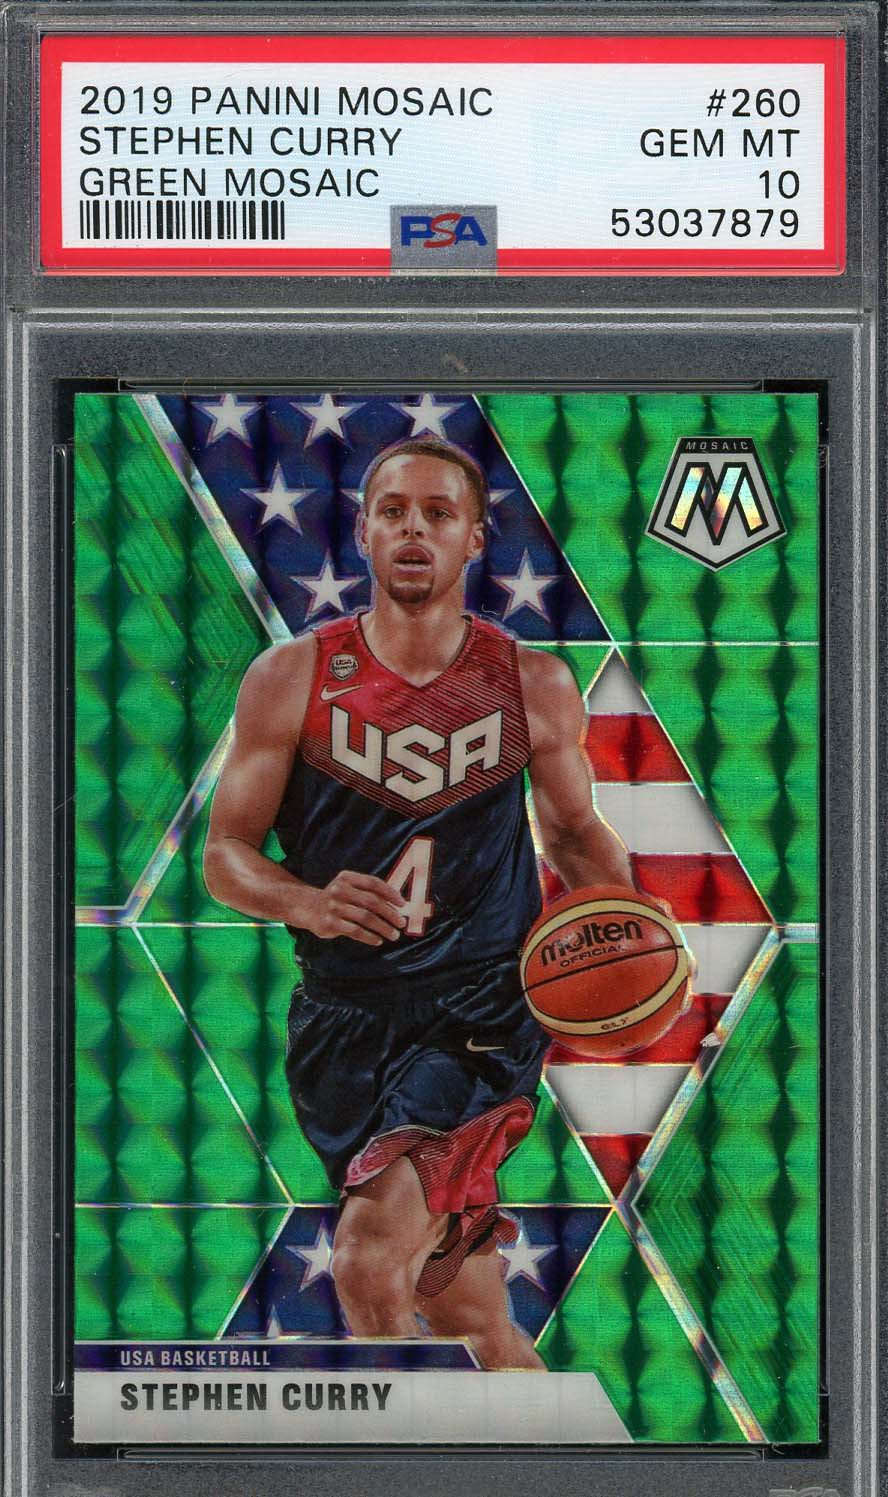 Stephen Curry 2019 Panini Mosaic Green Mosaic Basketball Card #260 PSA 10-Powers Sports Memorabilia